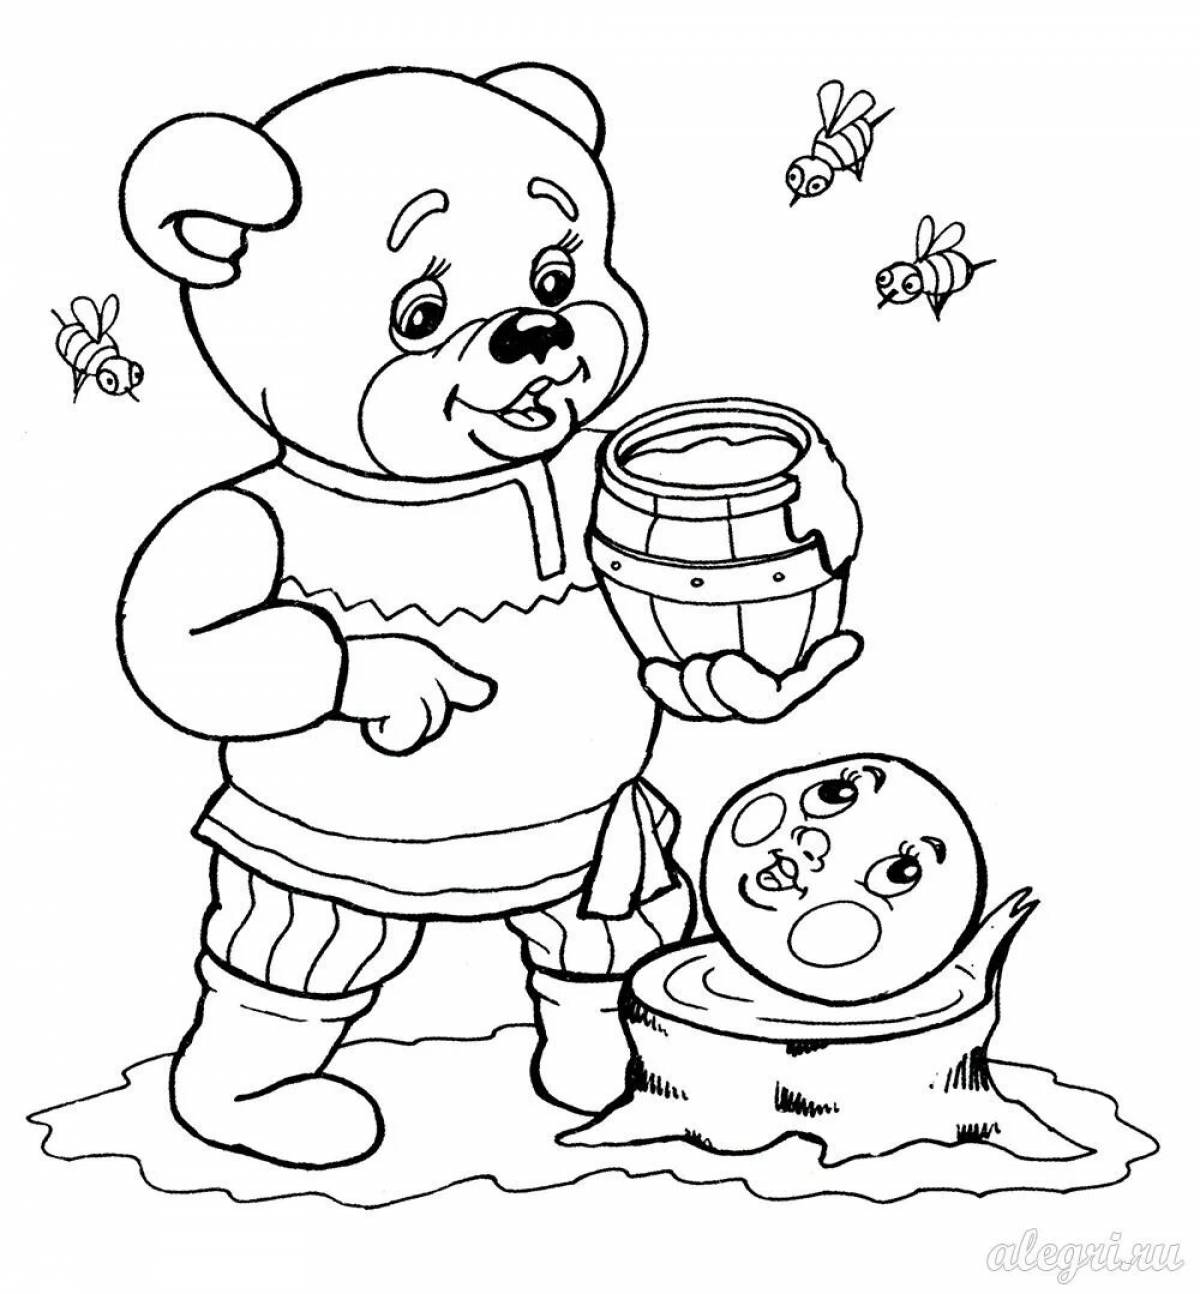 Live bun and bear coloring book